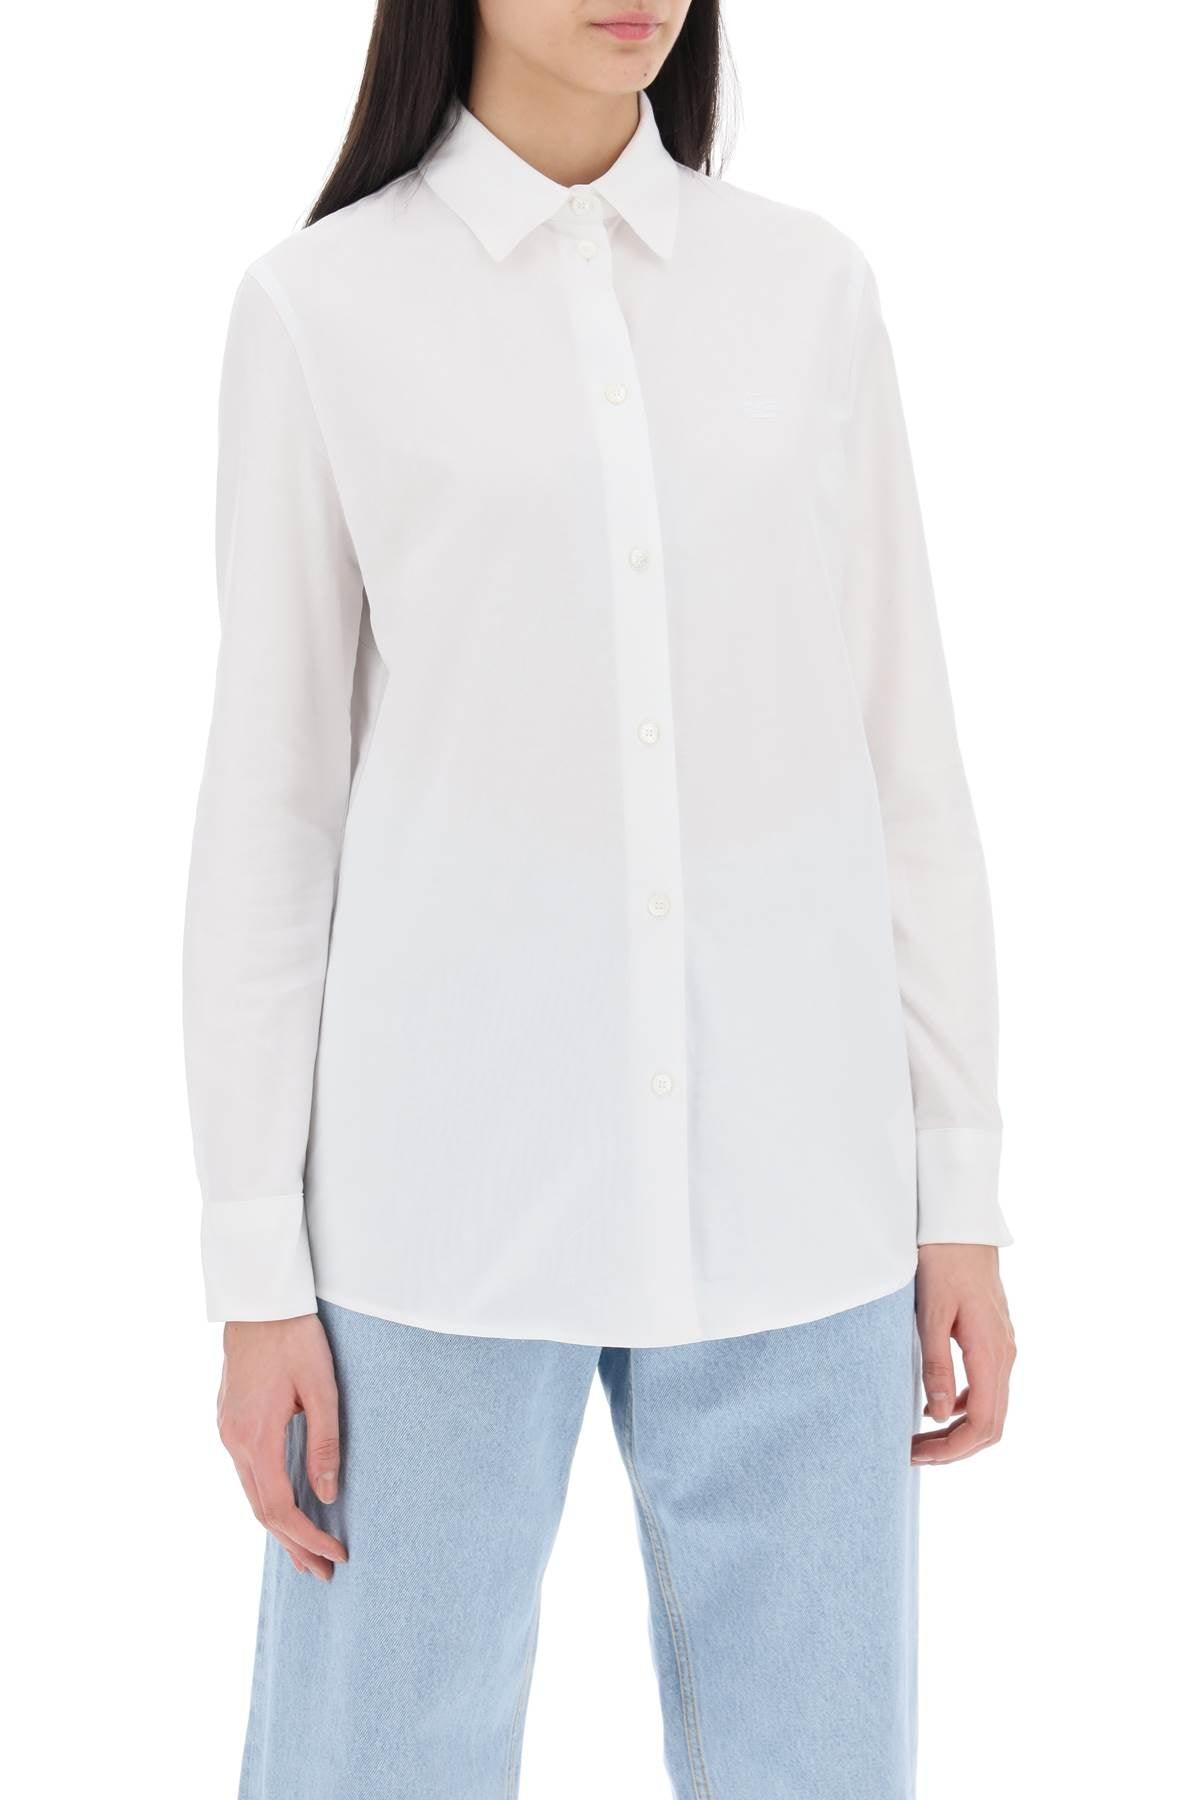 Etro Oxford Cotton Shirt - JOHN JULIA